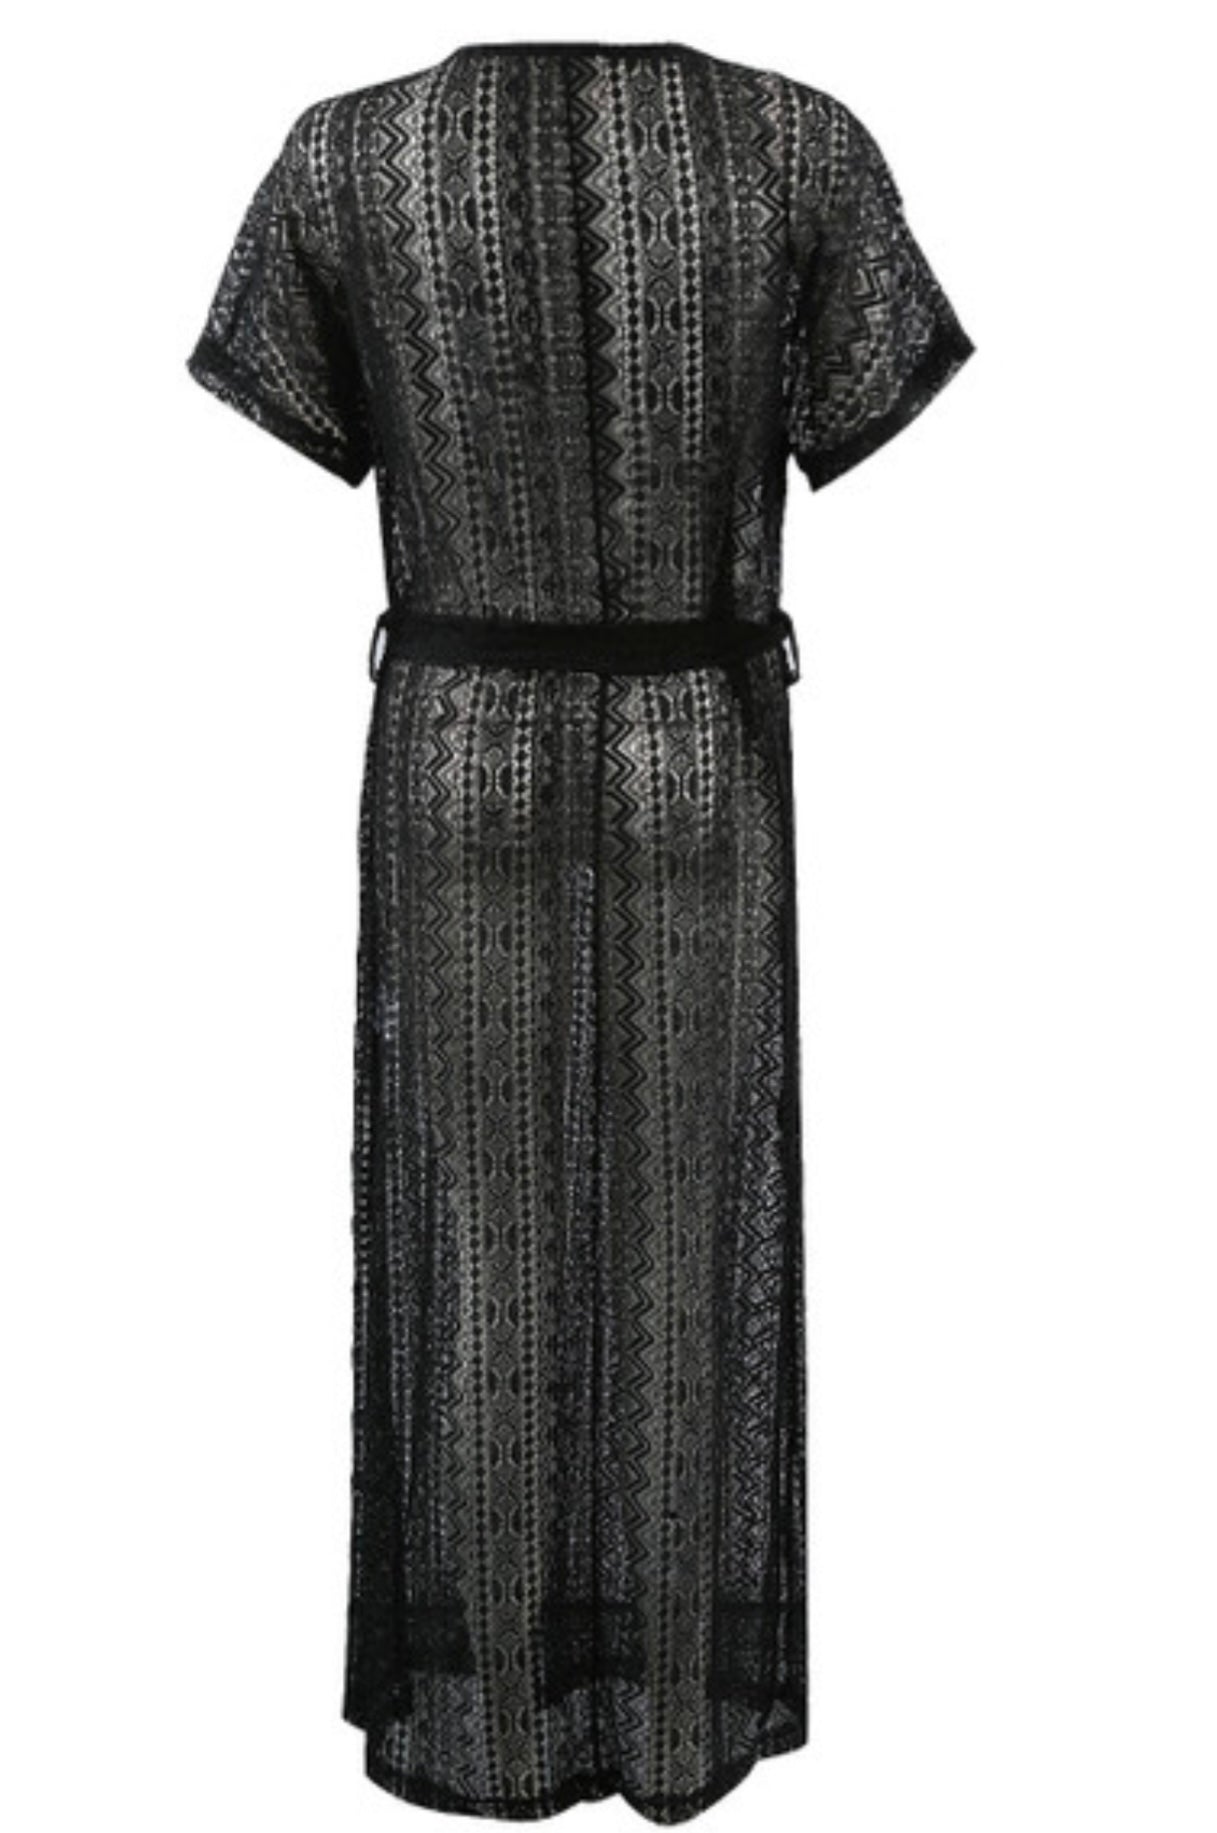 Black Lace mesh over-dress